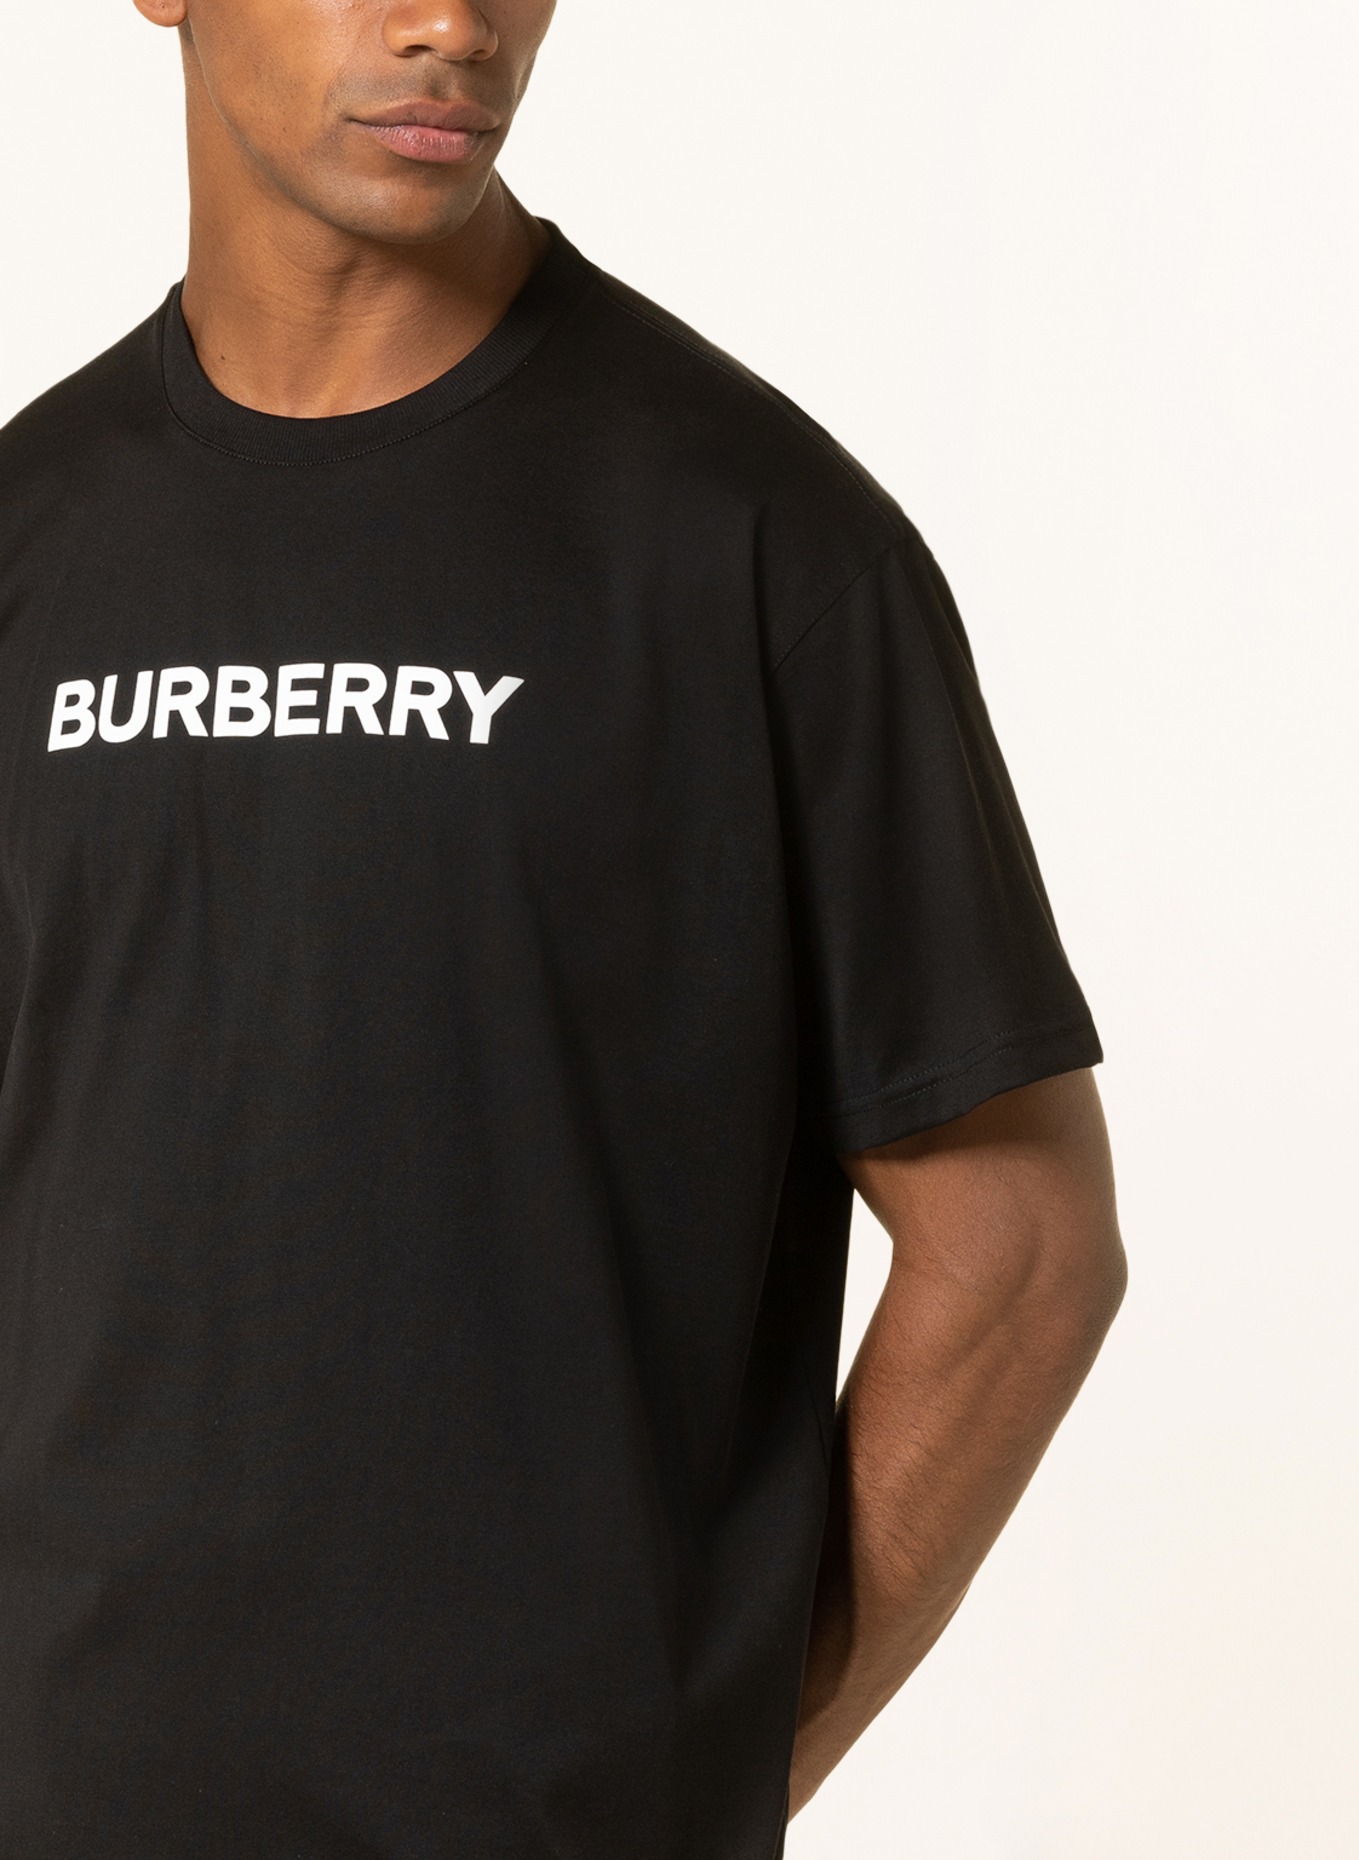 BURBERRY T-shirt HARRISTON in black